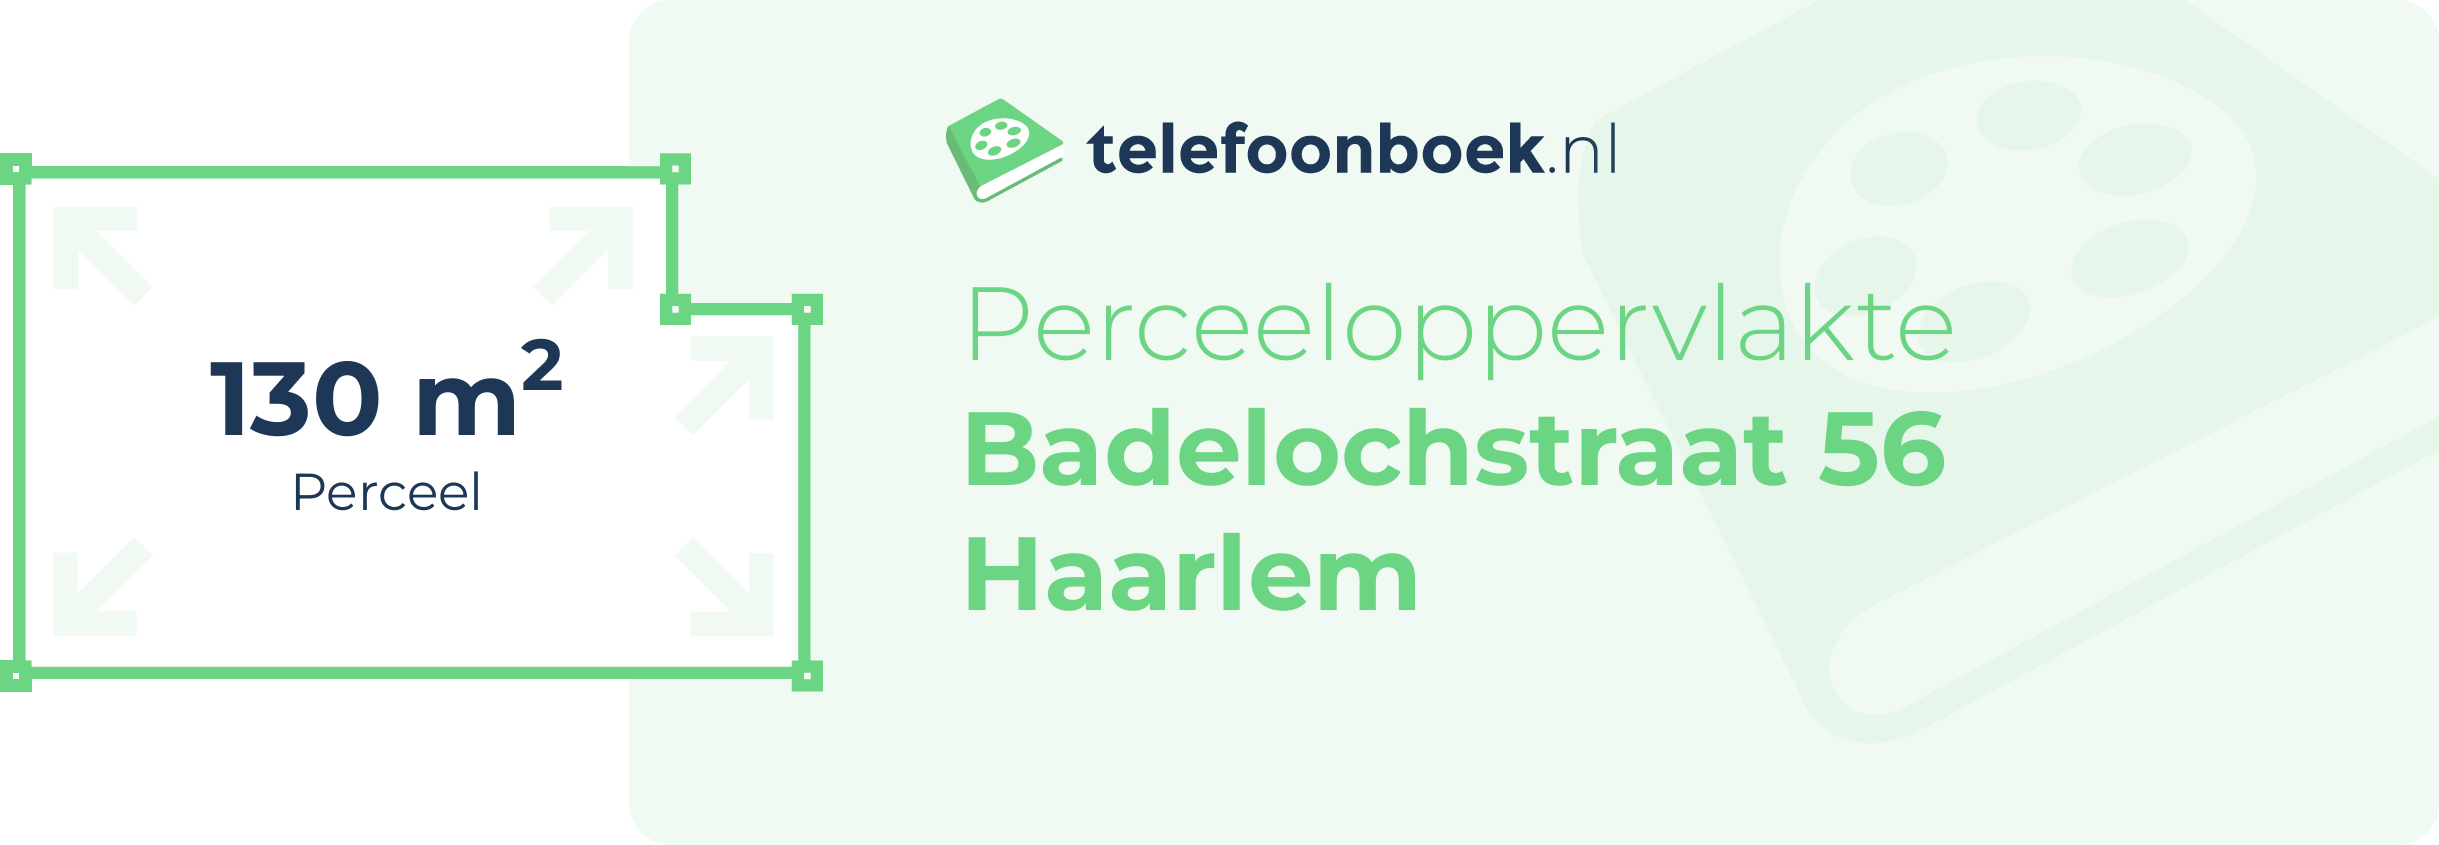 Perceeloppervlakte Badelochstraat 56 Haarlem